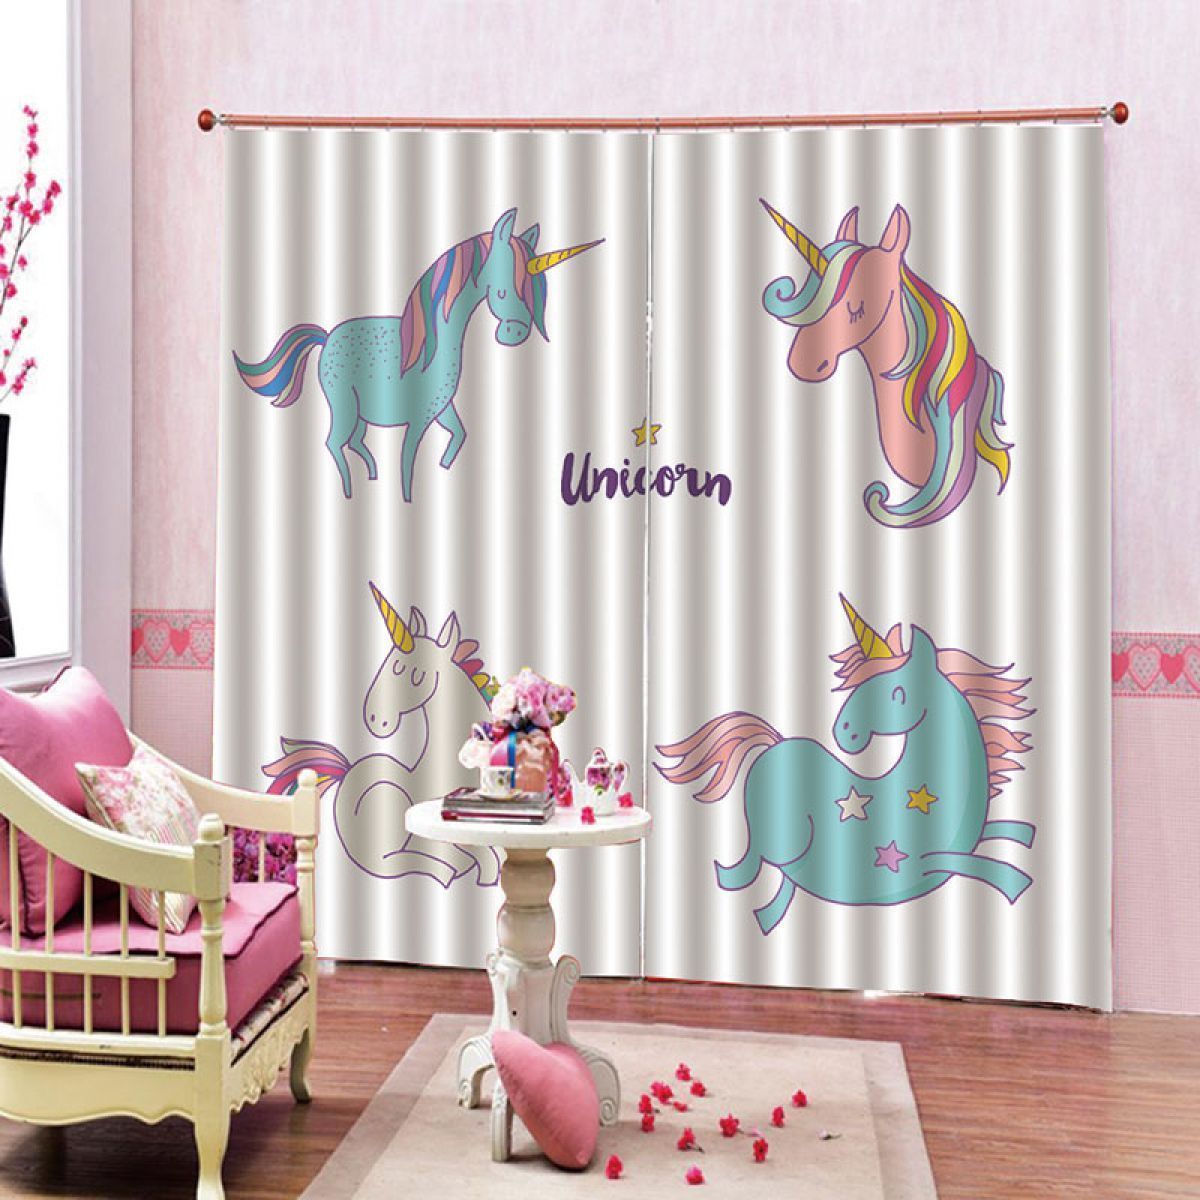 3d Unicorn Cartoon Pattern Printed Window Curtain Home Decor